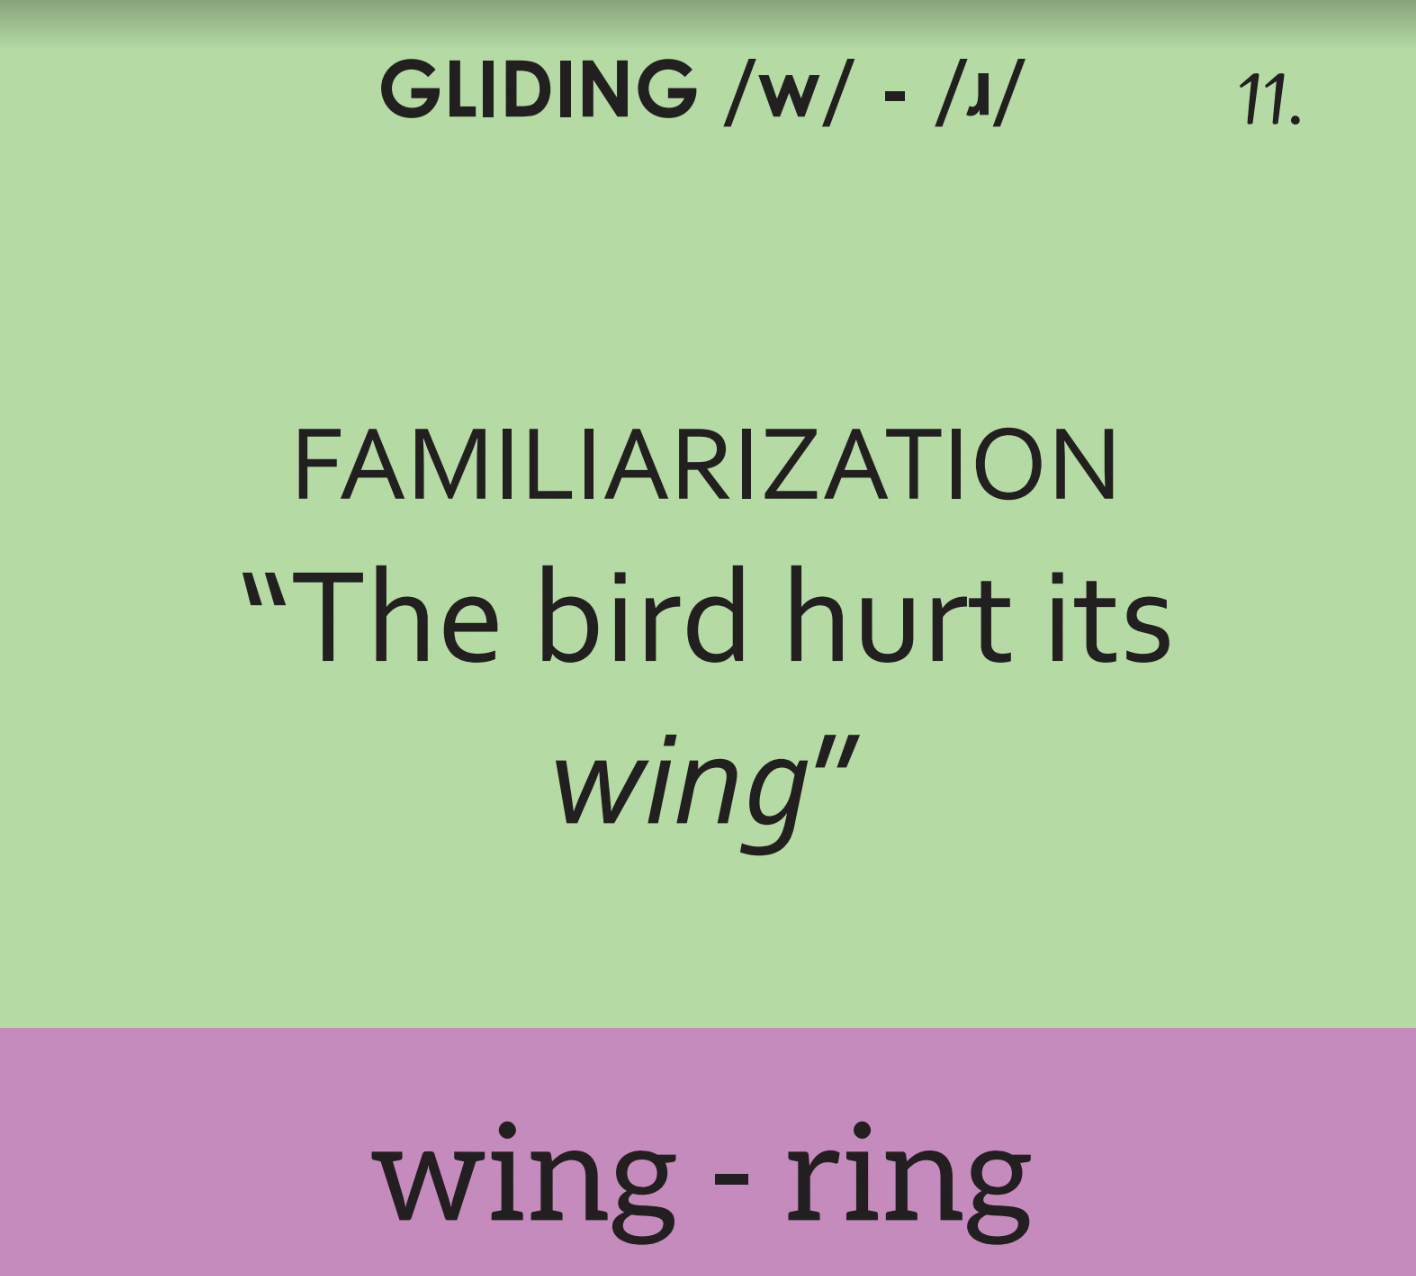 [title]Minimal Pairs: Gliding